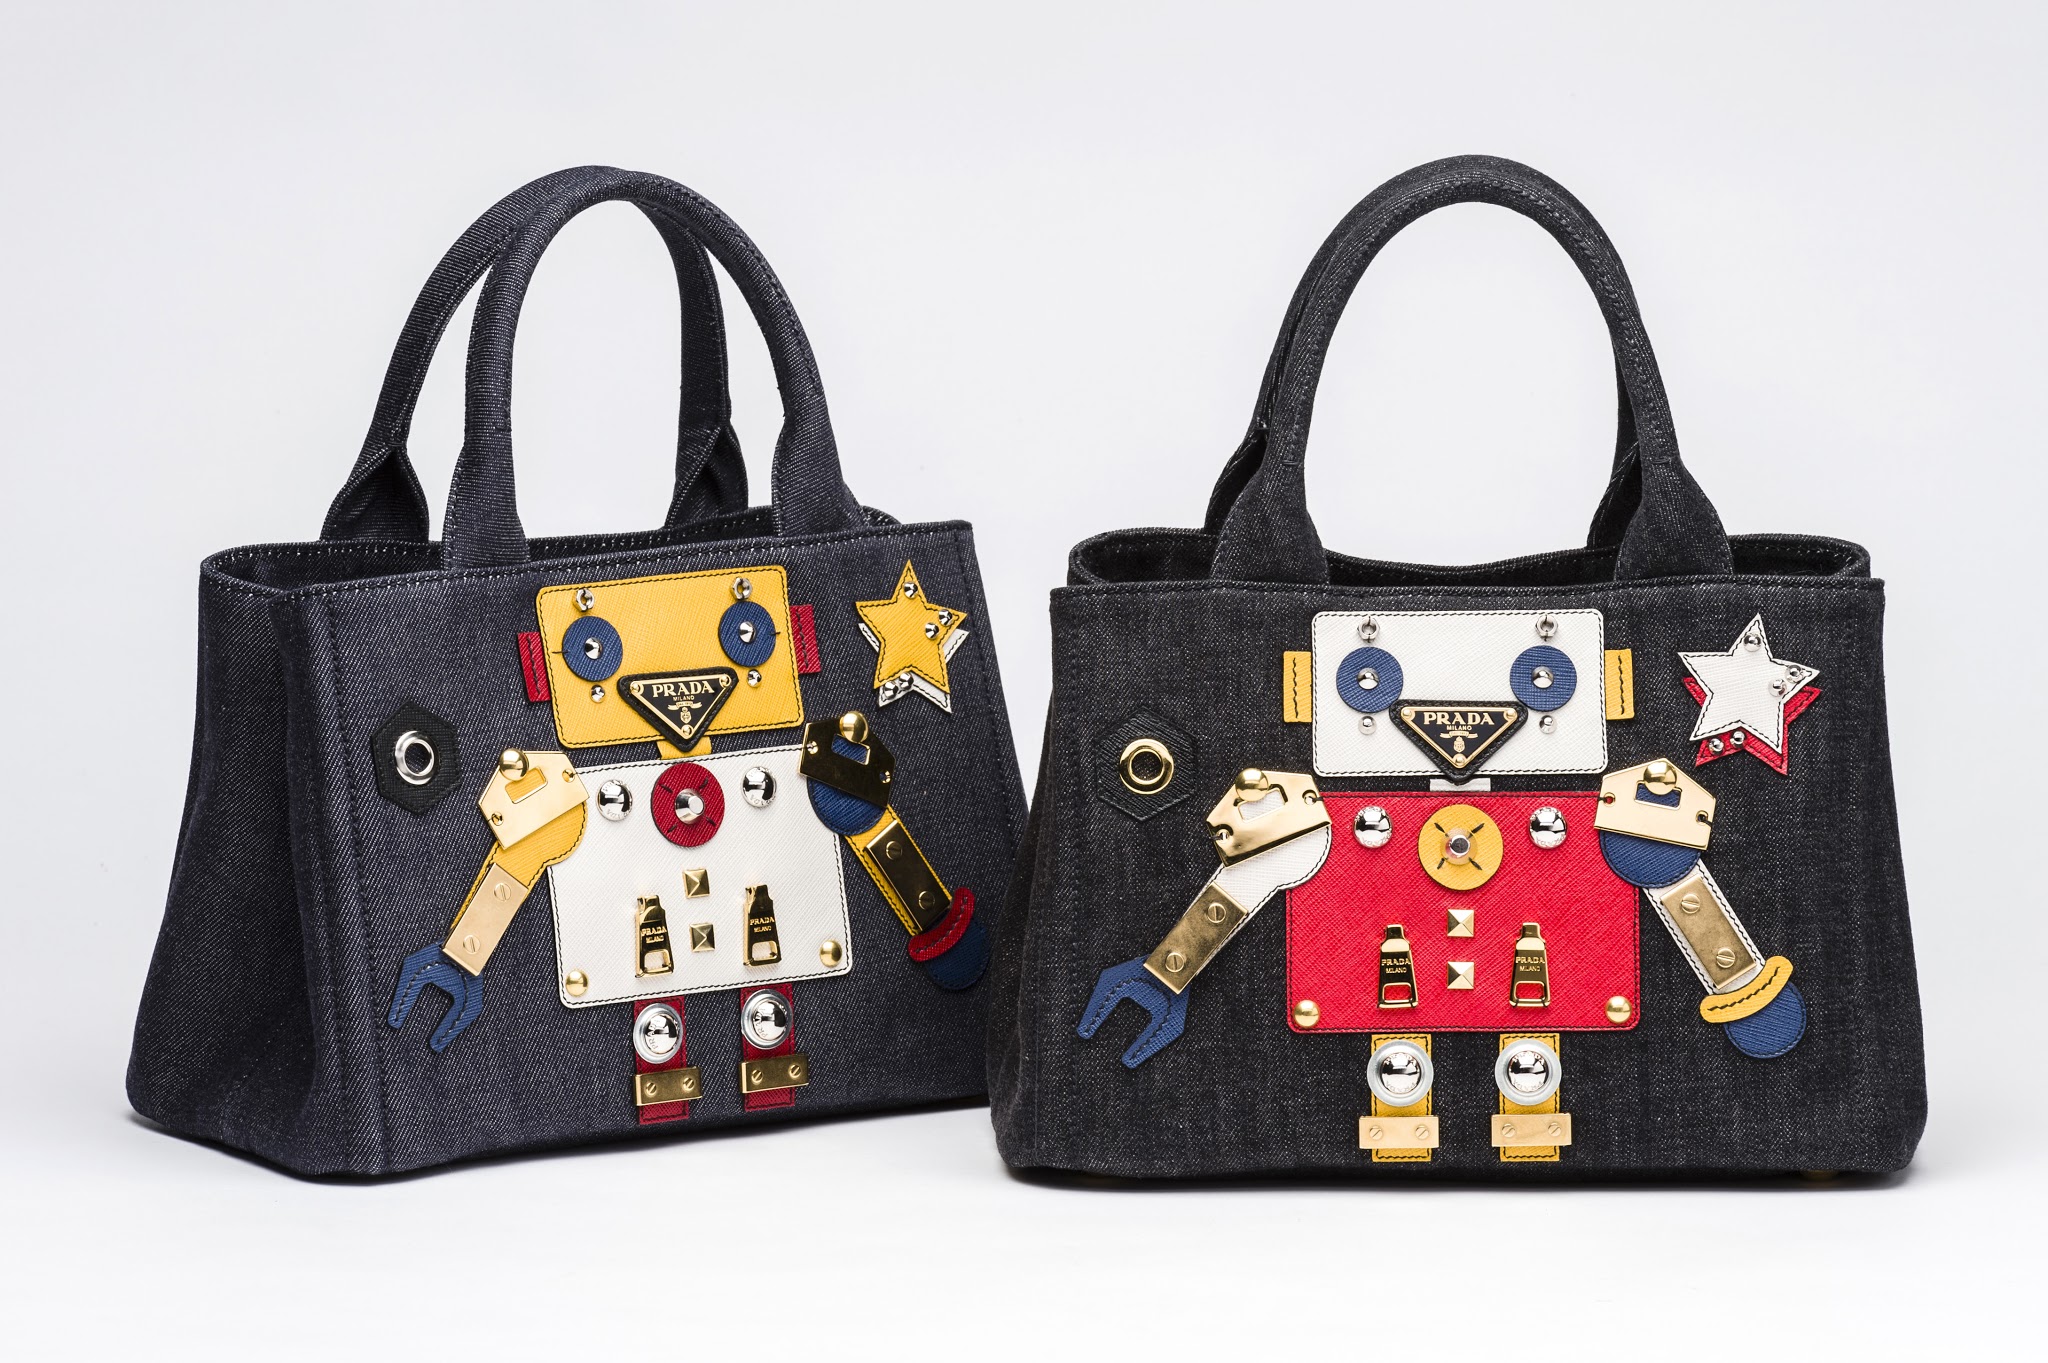 Prada's Limited Edition Robot Bags 